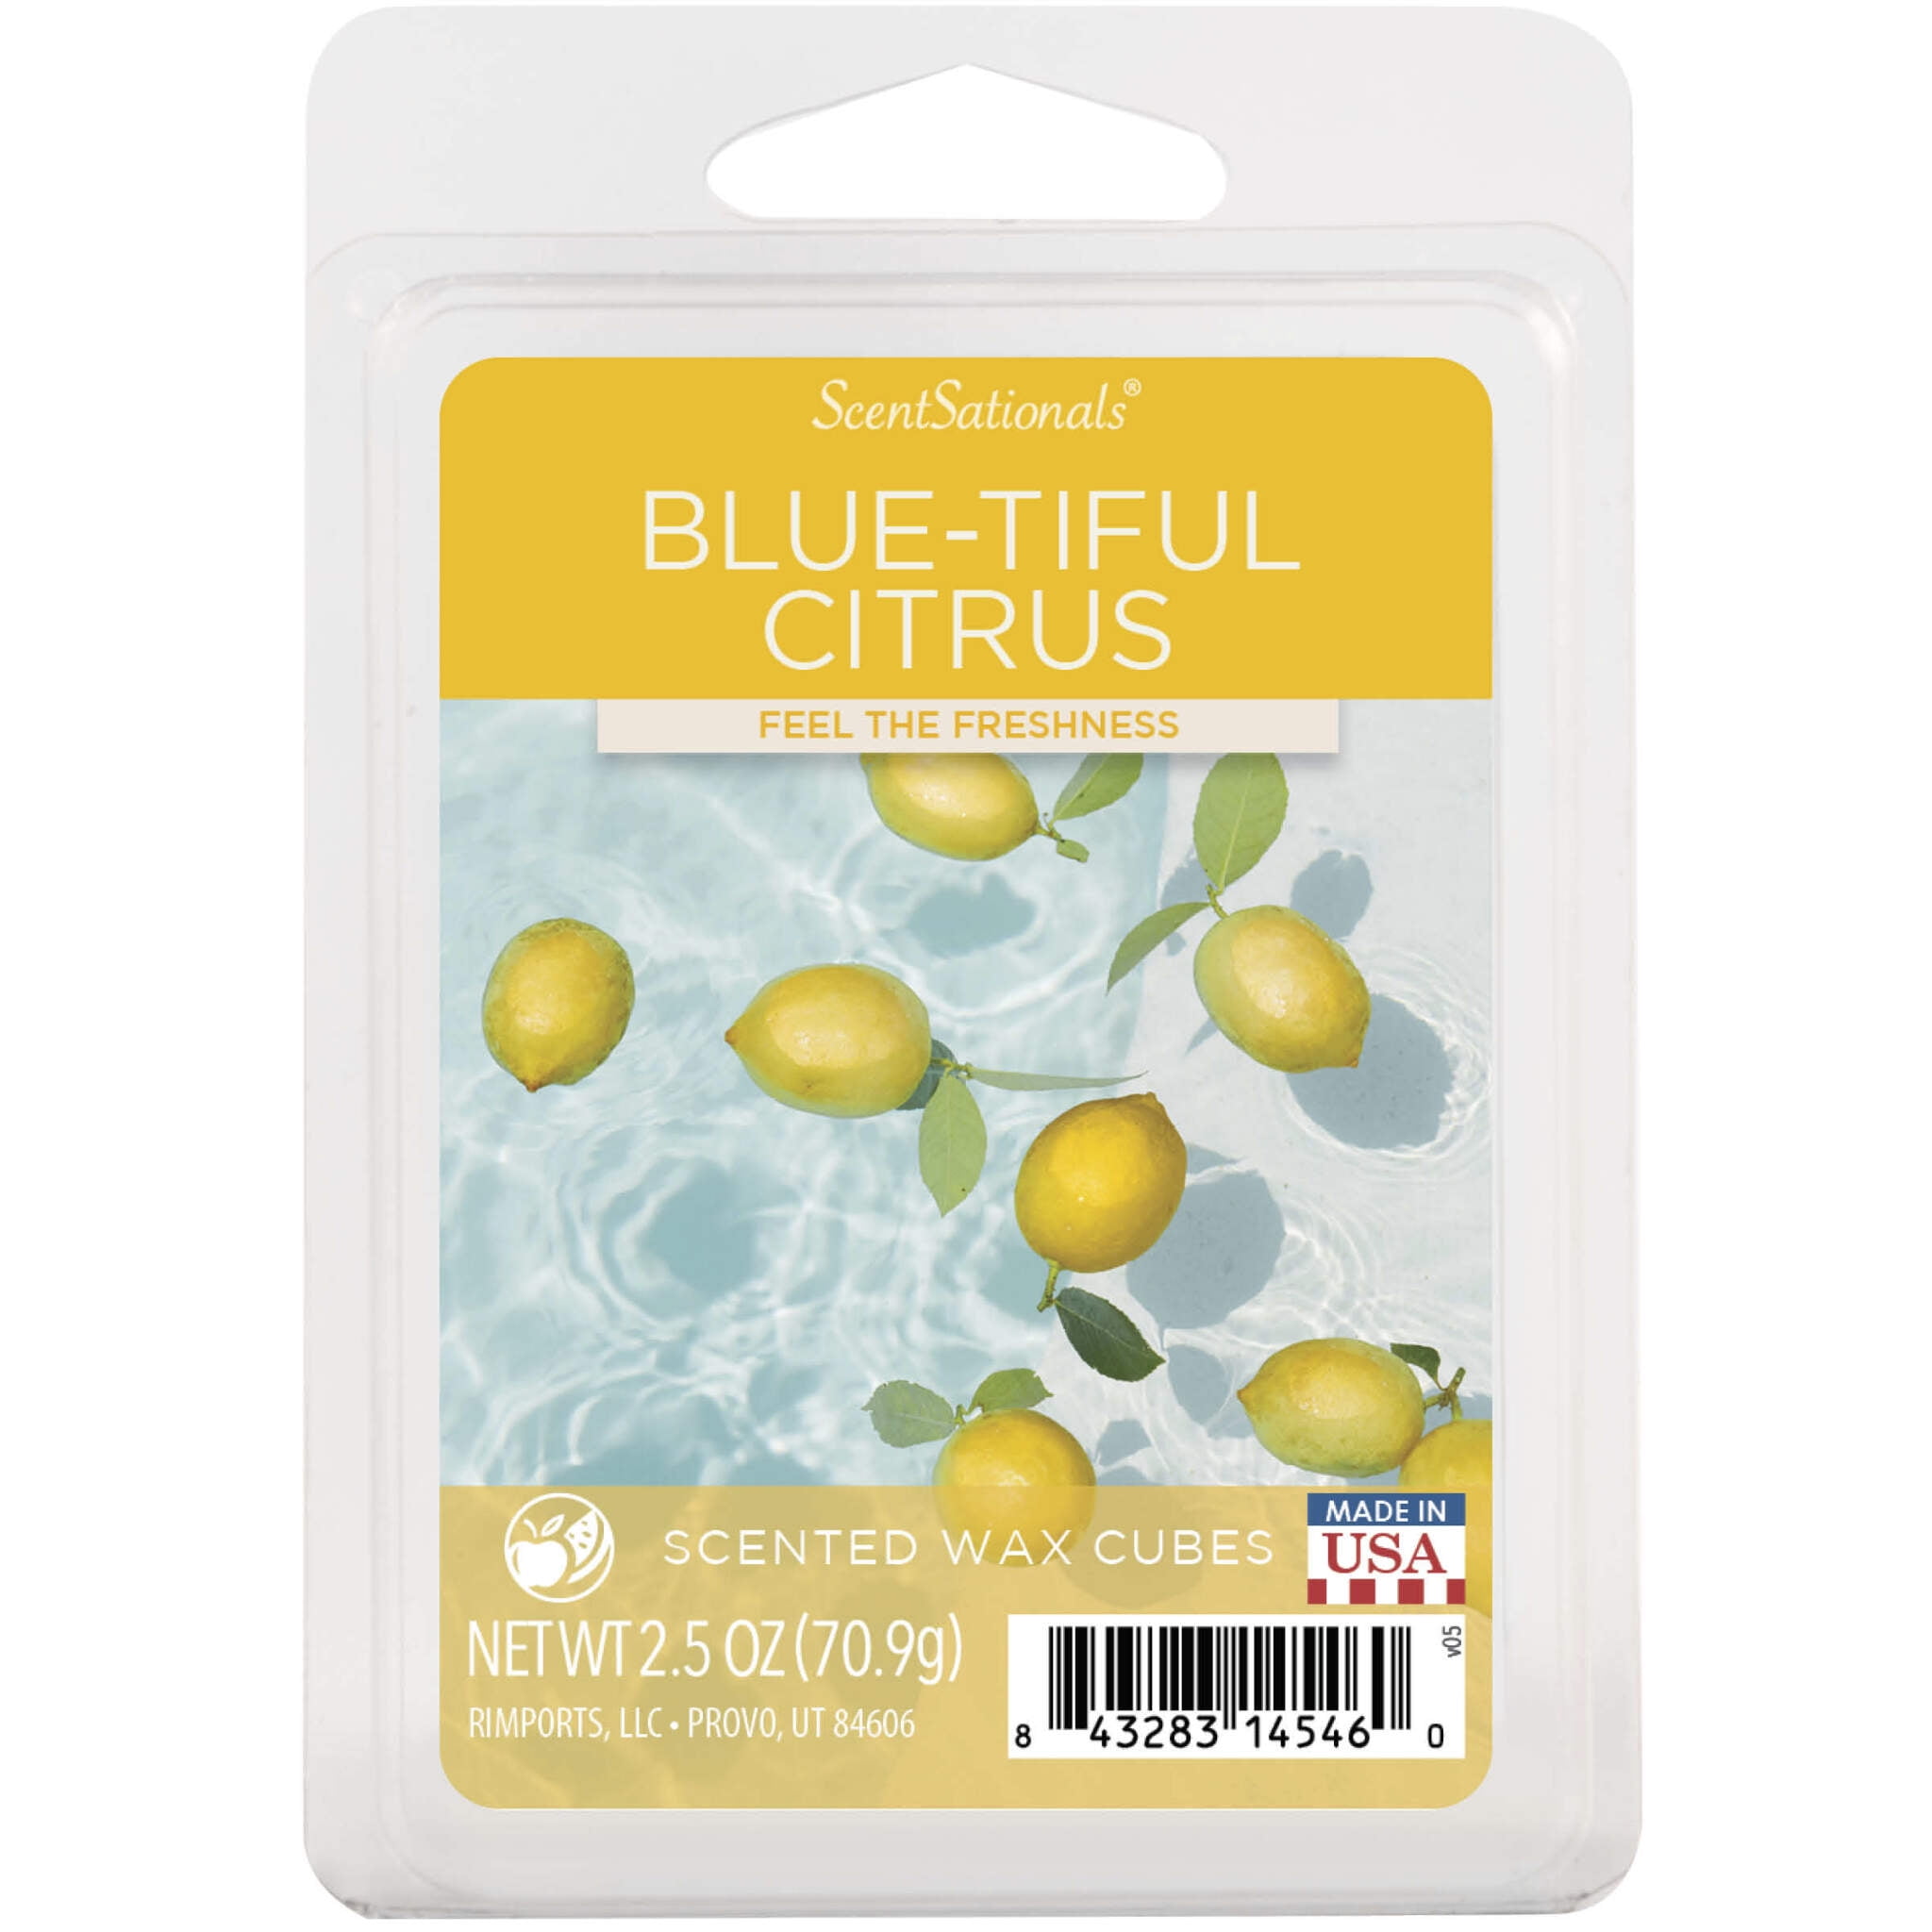 Blue-tiful Citrus Scented Wax Melts, ScentSationals, 2.5 oz (1-Pack)